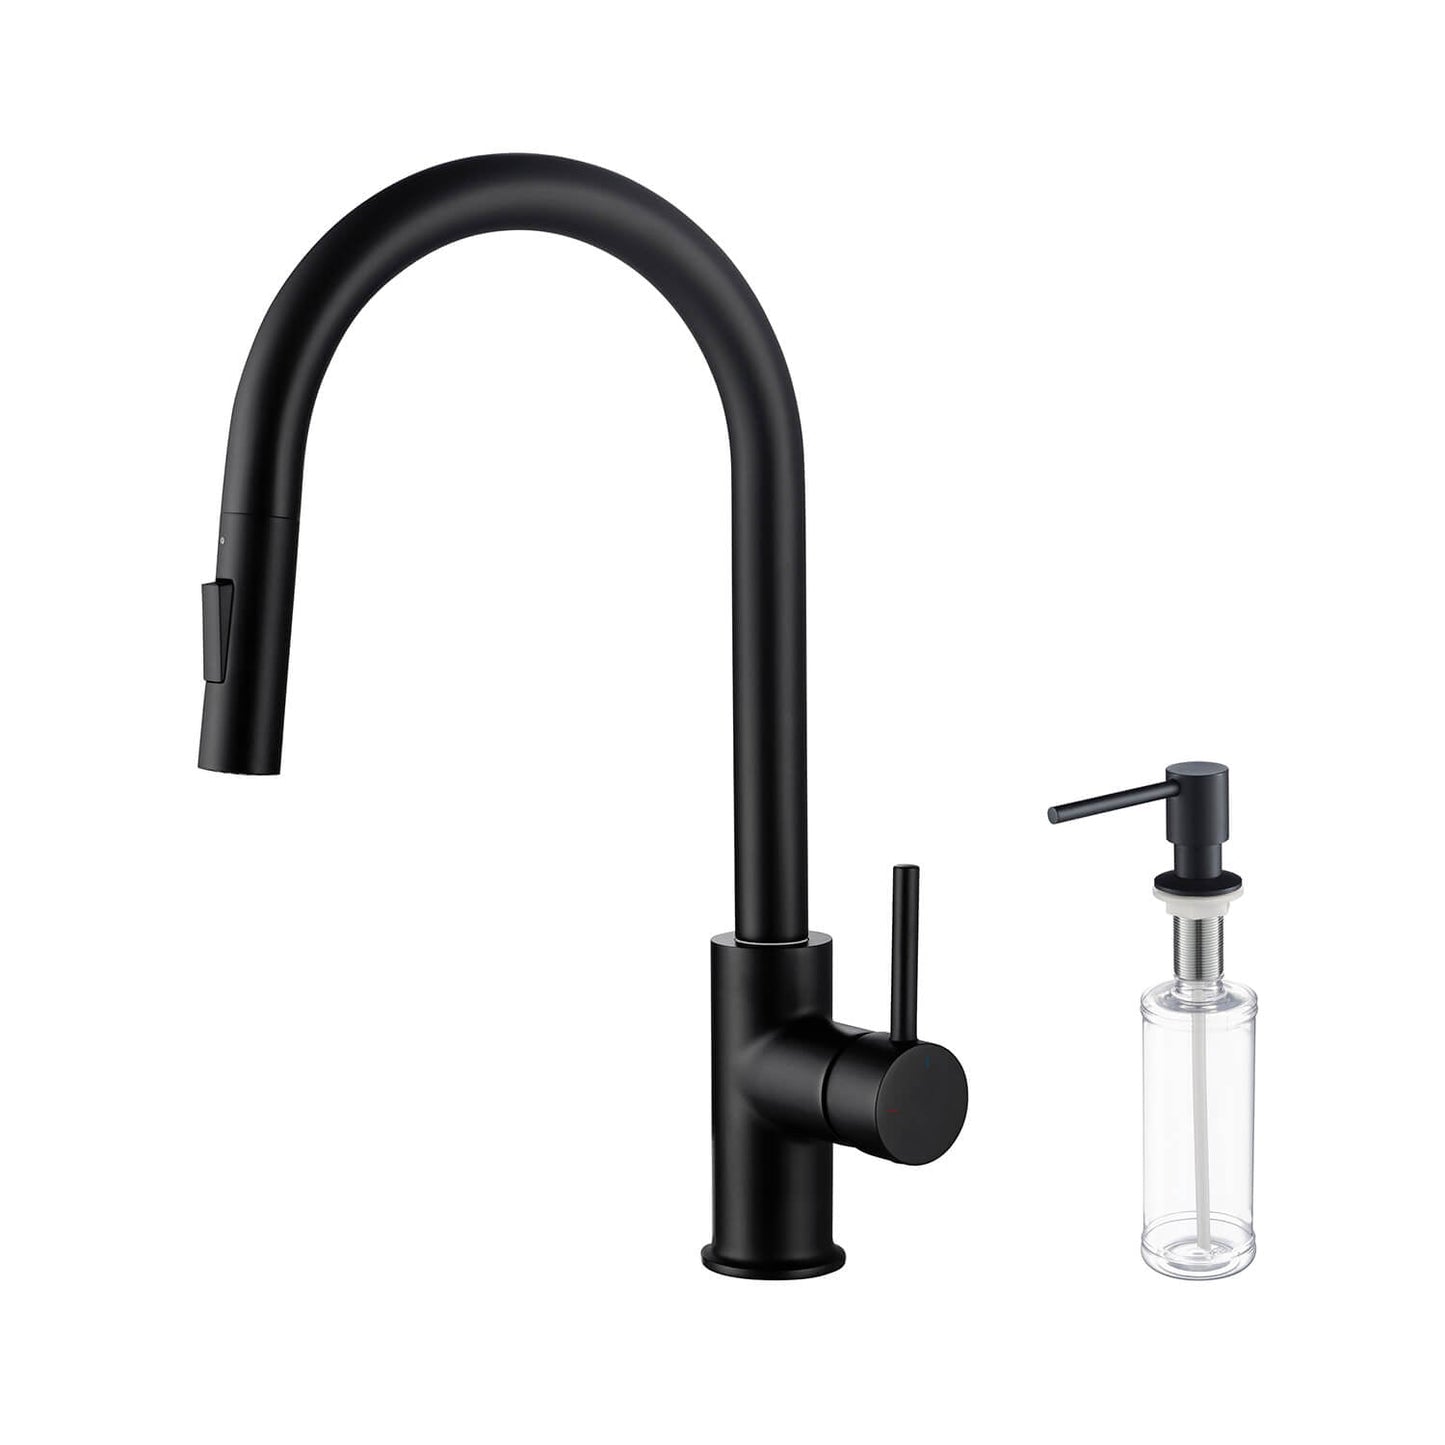 Kibi Circular Single Handle Pull Down Kitchen Faucet With Soap Dispenser in Matte Black Finish